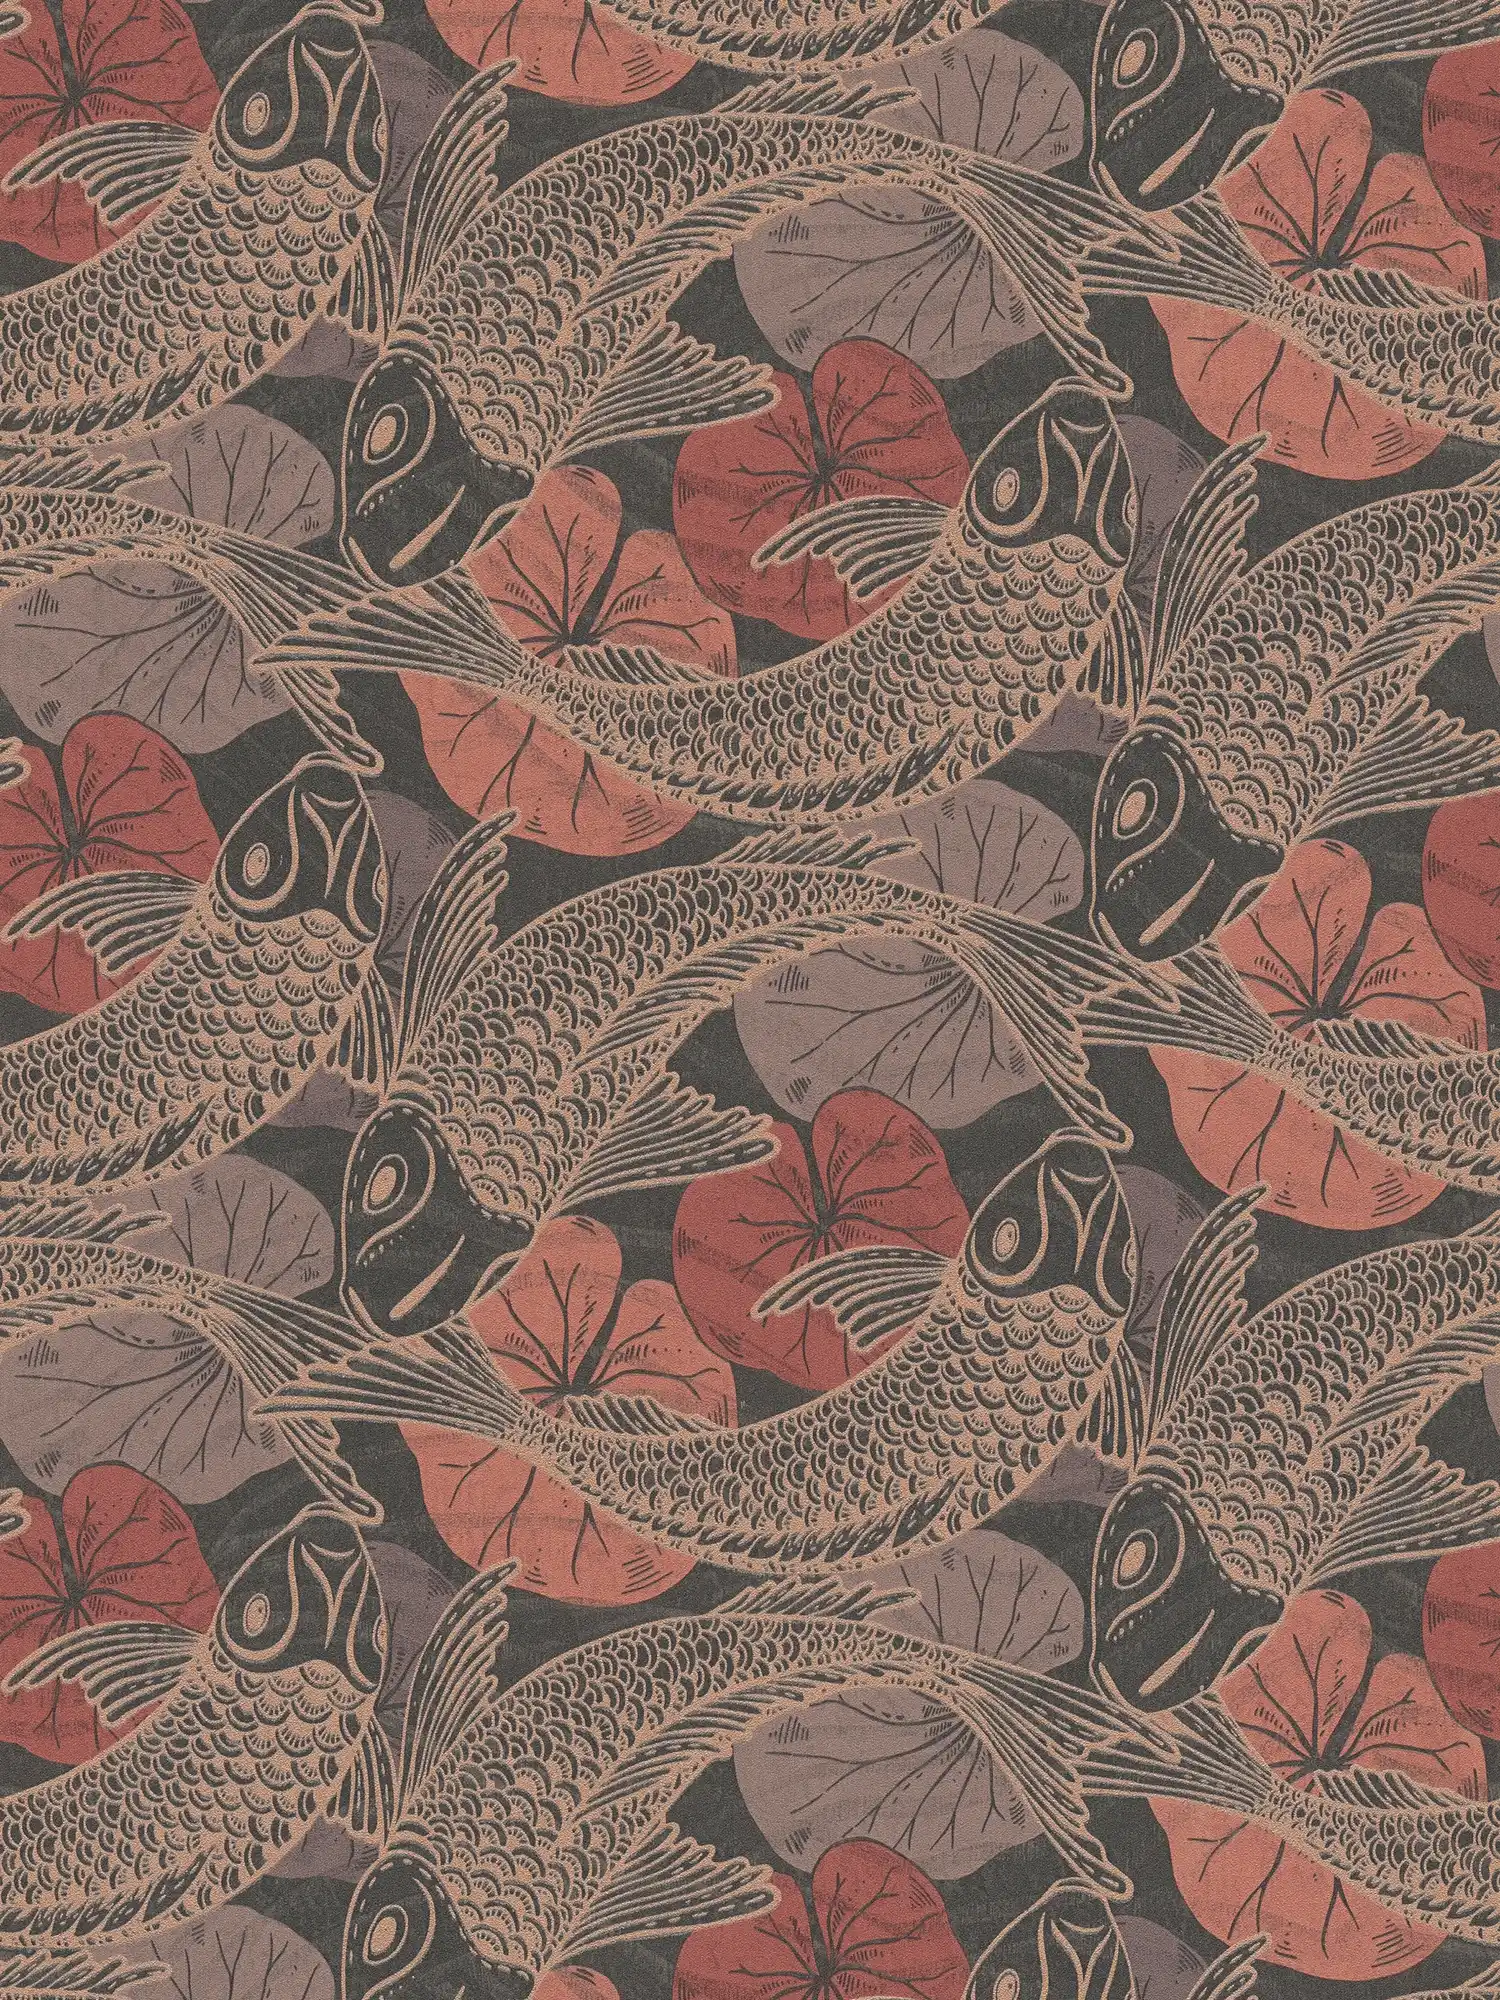 Pattern wallpaper koi motif with metallic accents - brown, red, black
